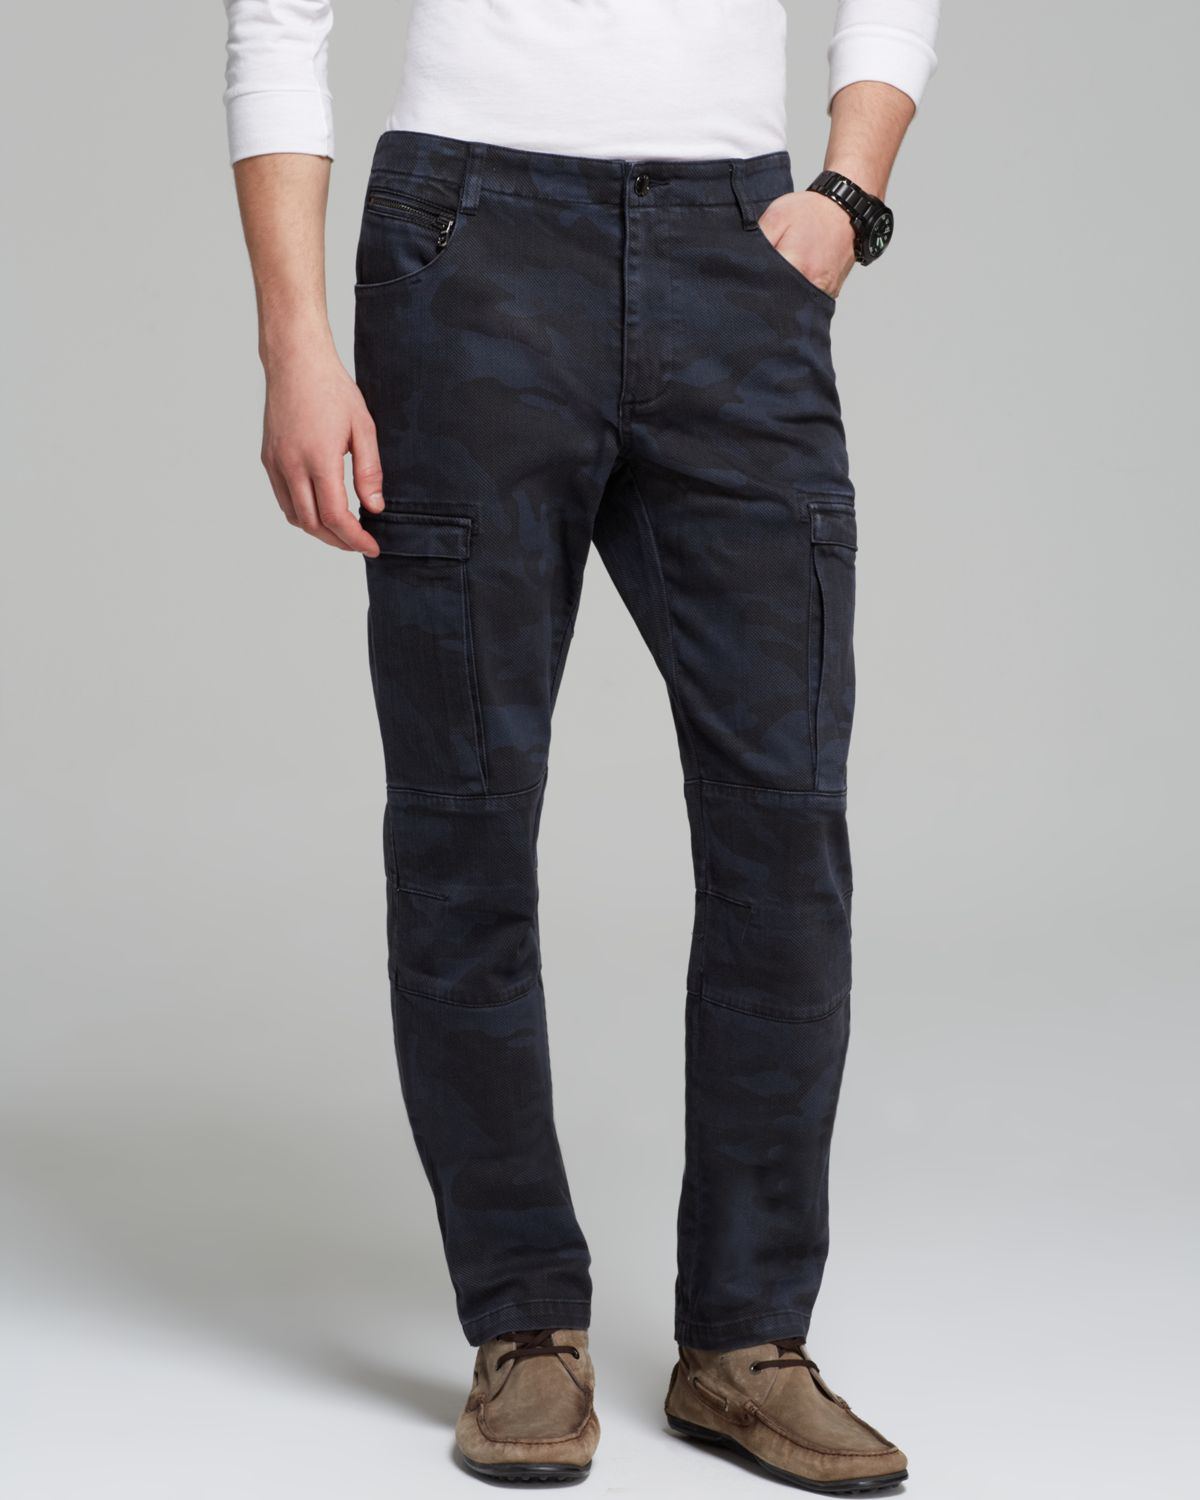 Michael Kors Camo Cargo Pants - Slim Fit in Indigo (Blue) for Men - Lyst